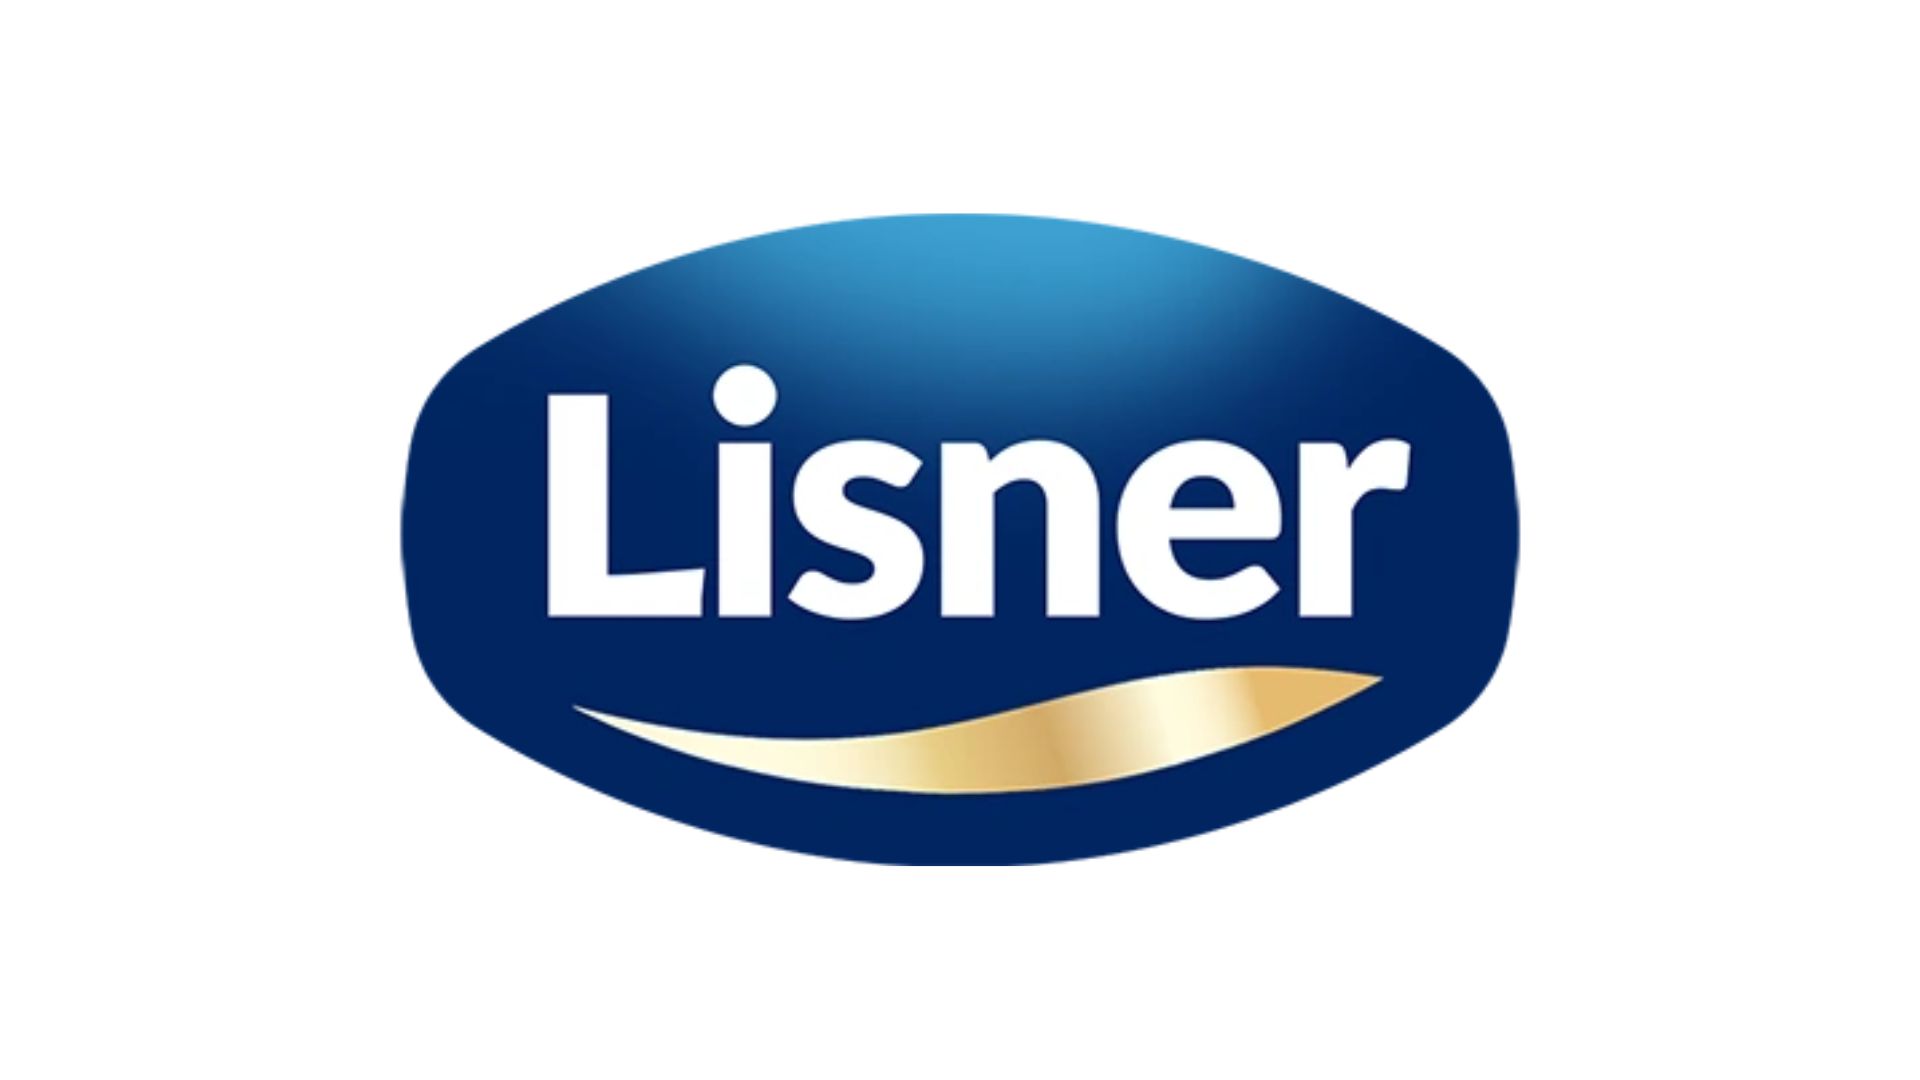 Lisner logo